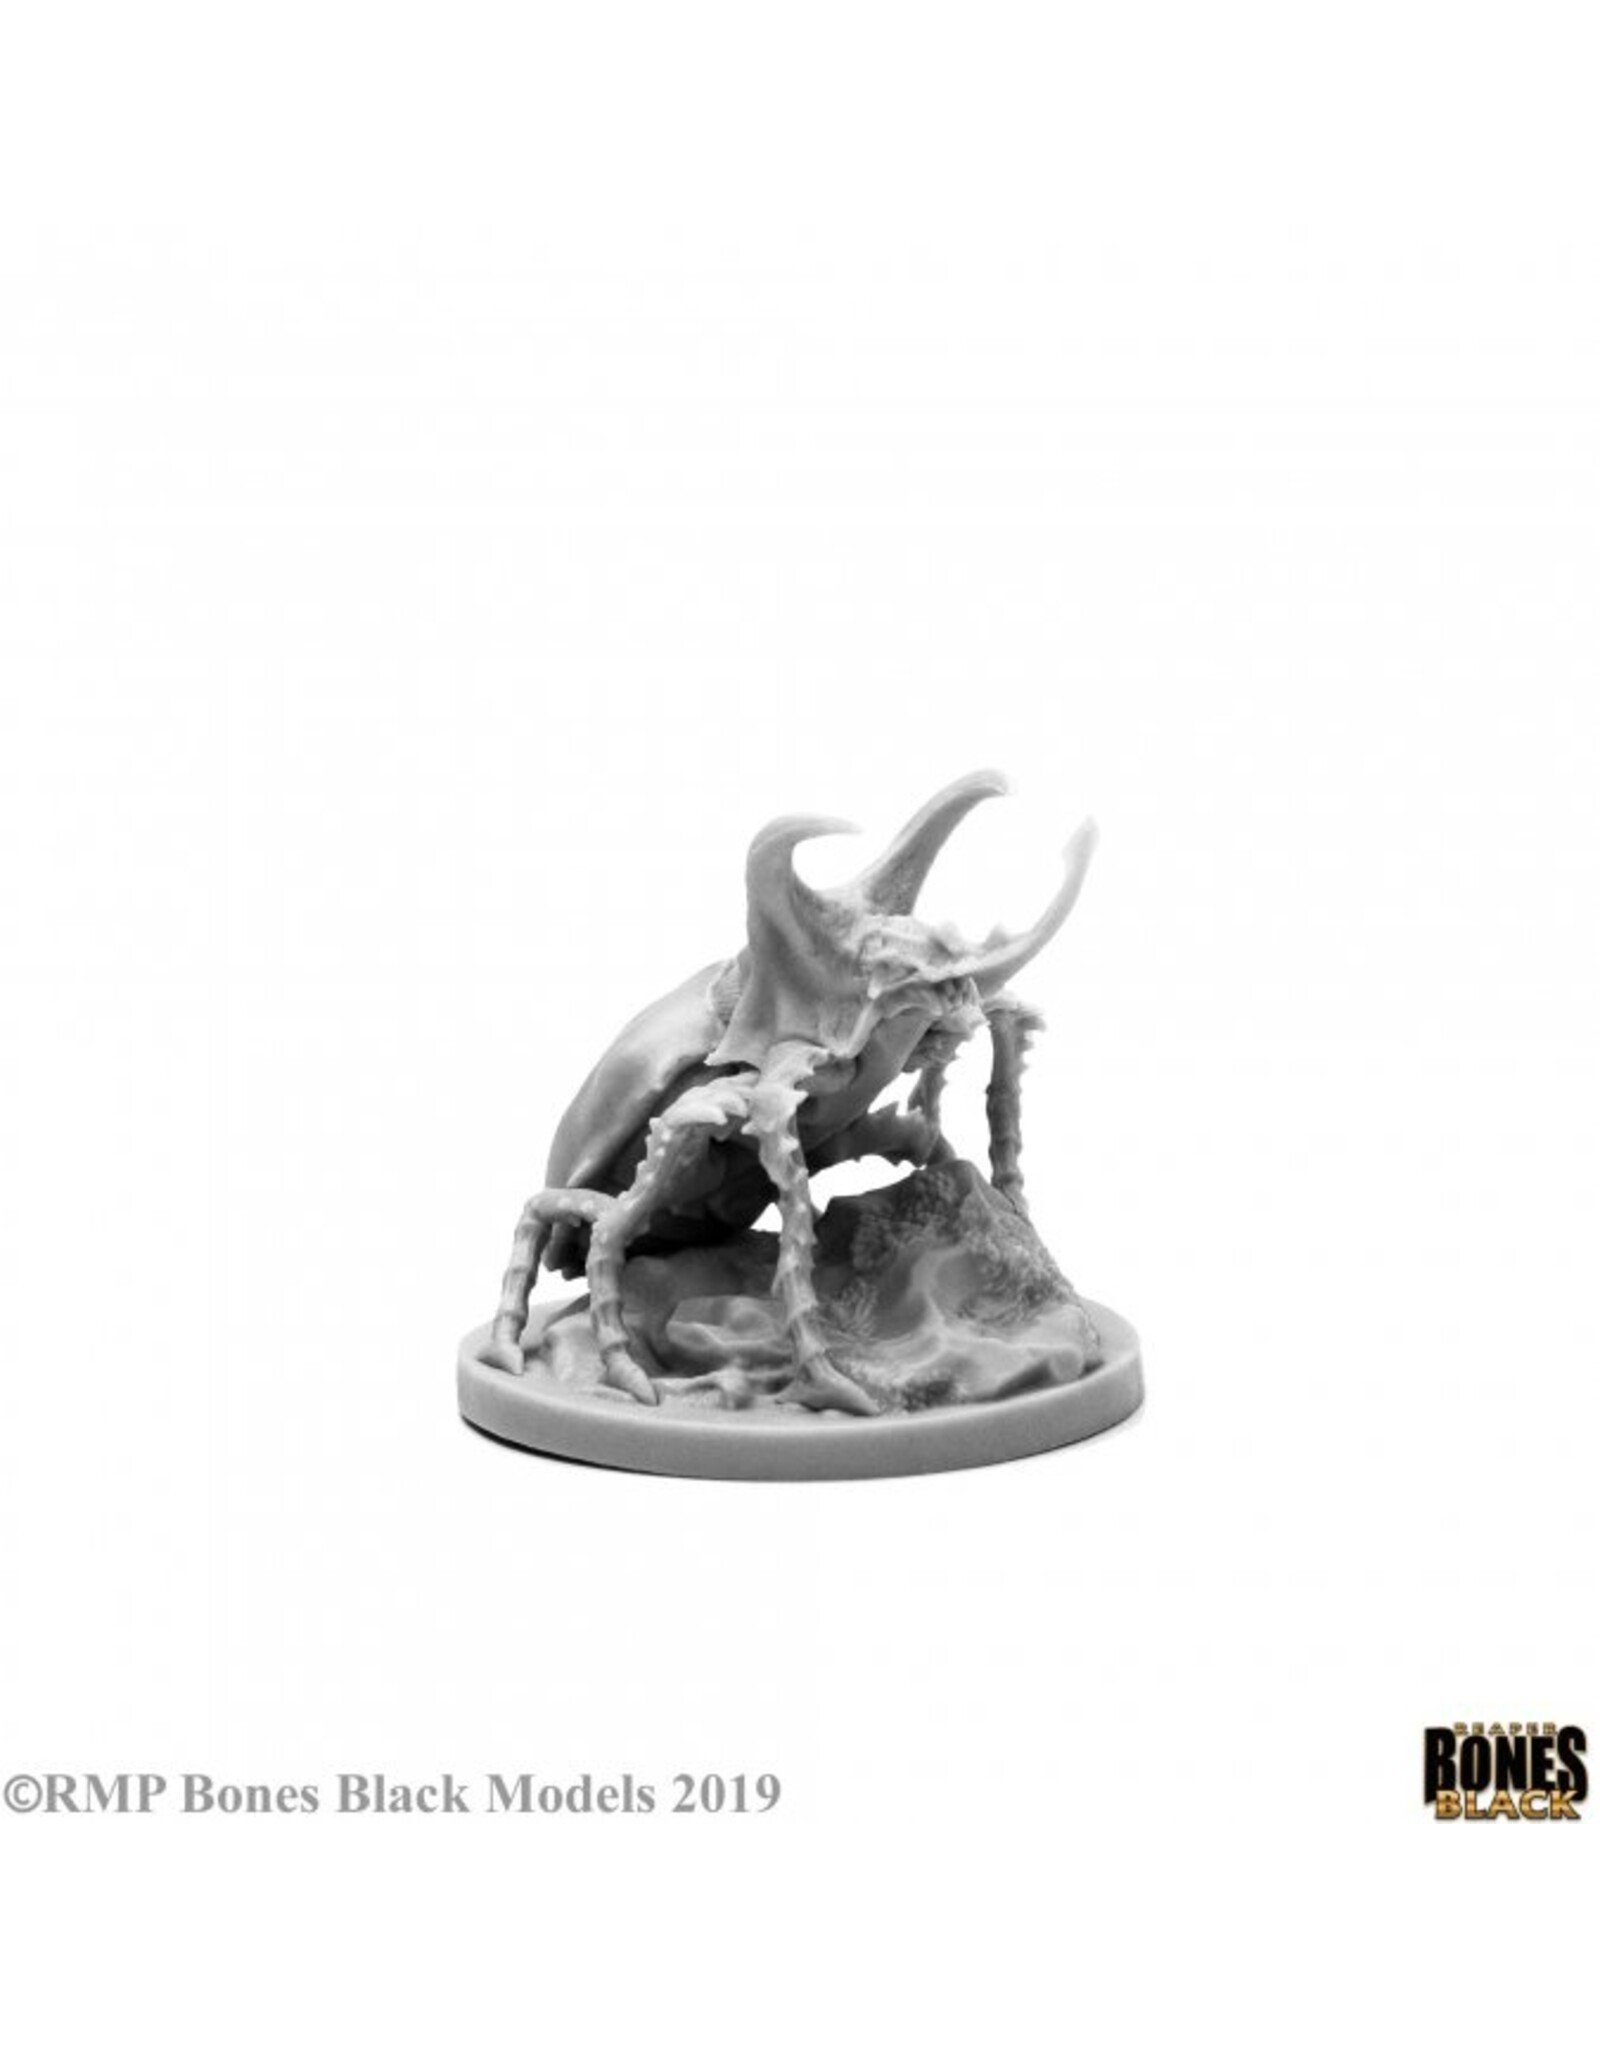 Reaper Bones Black: Giant Rhino Beetle